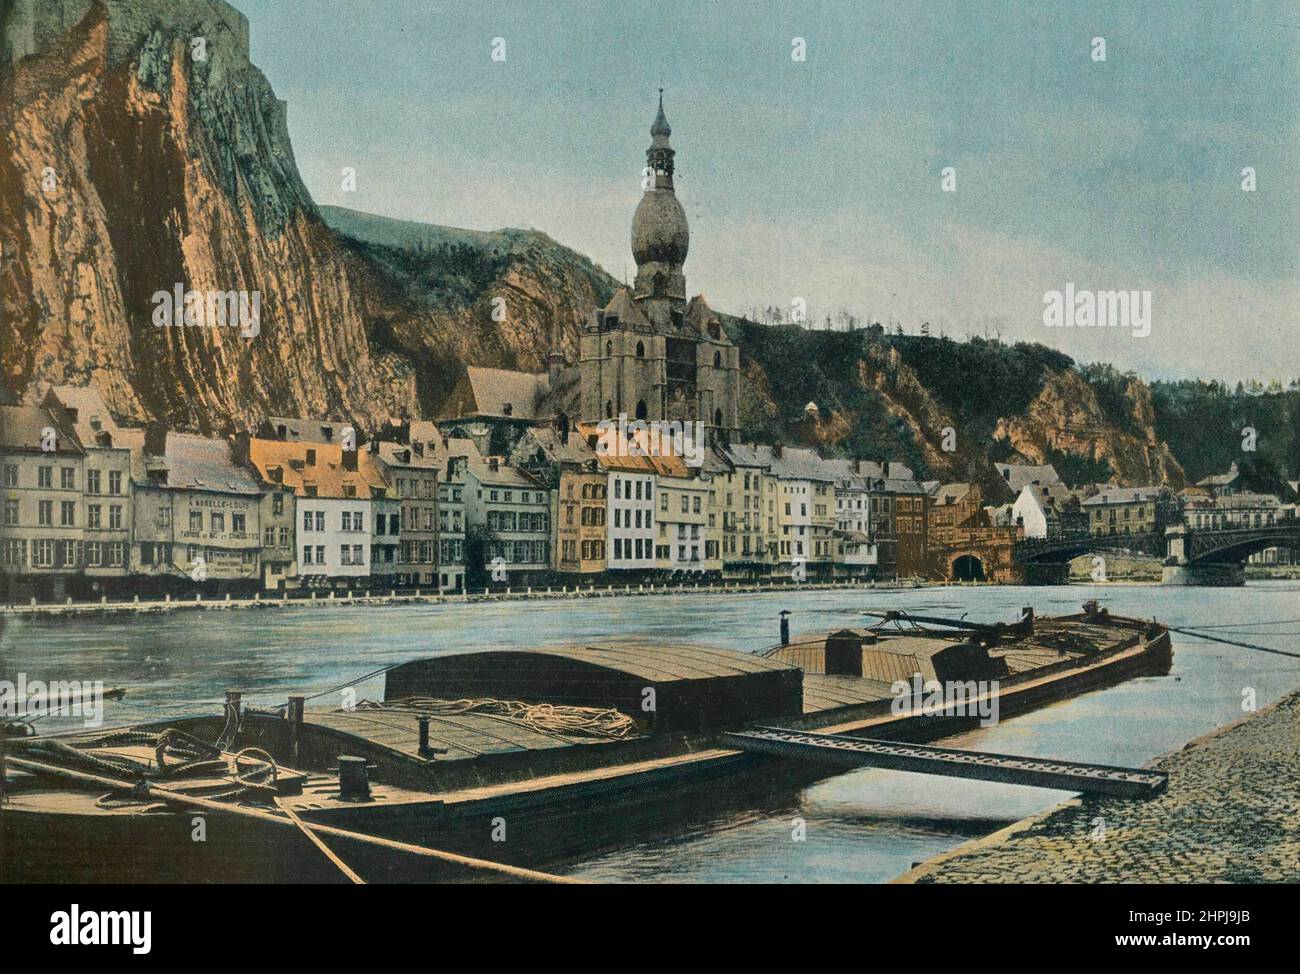 Dinant Autour Du Monde en Belgique 1895 - 1900 (6) - 19. Jahrhundert französischer Farbfotografiedruck Stockfoto